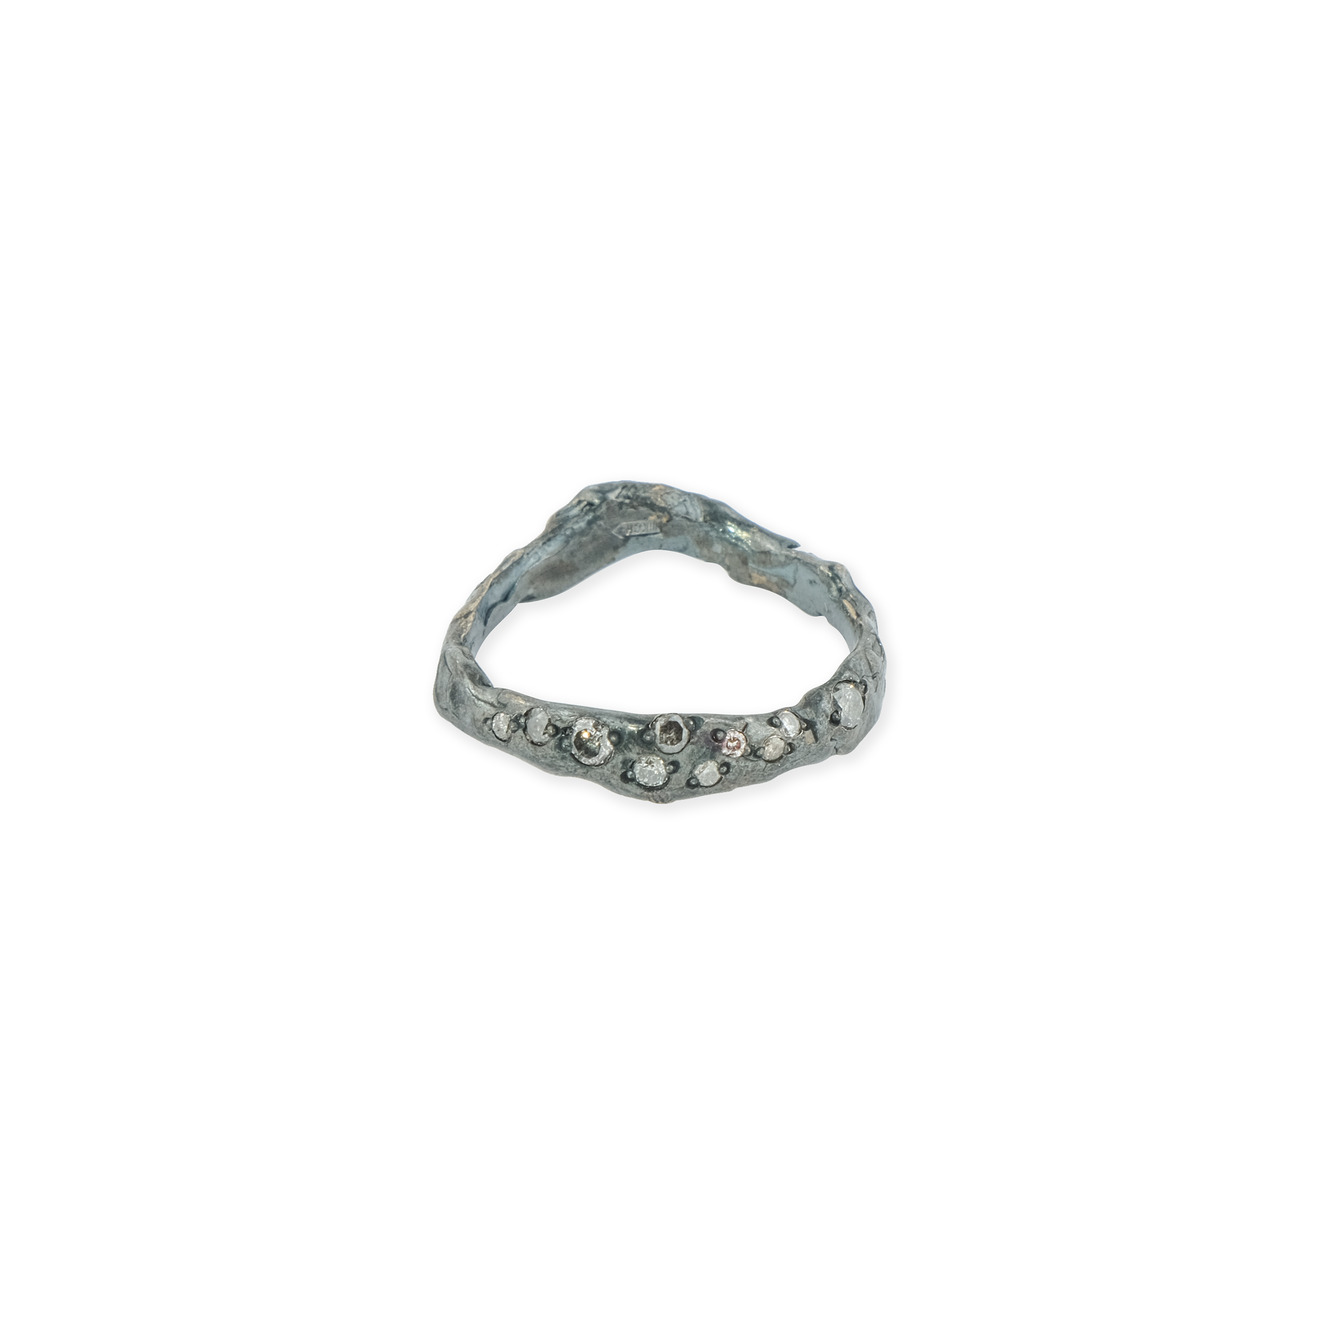 Kintsugi Jewelry Кольцо Brave из серебра с бриллиантами kintsugi jewelry кольцо my way из серебра с позолотой и бриллиантами